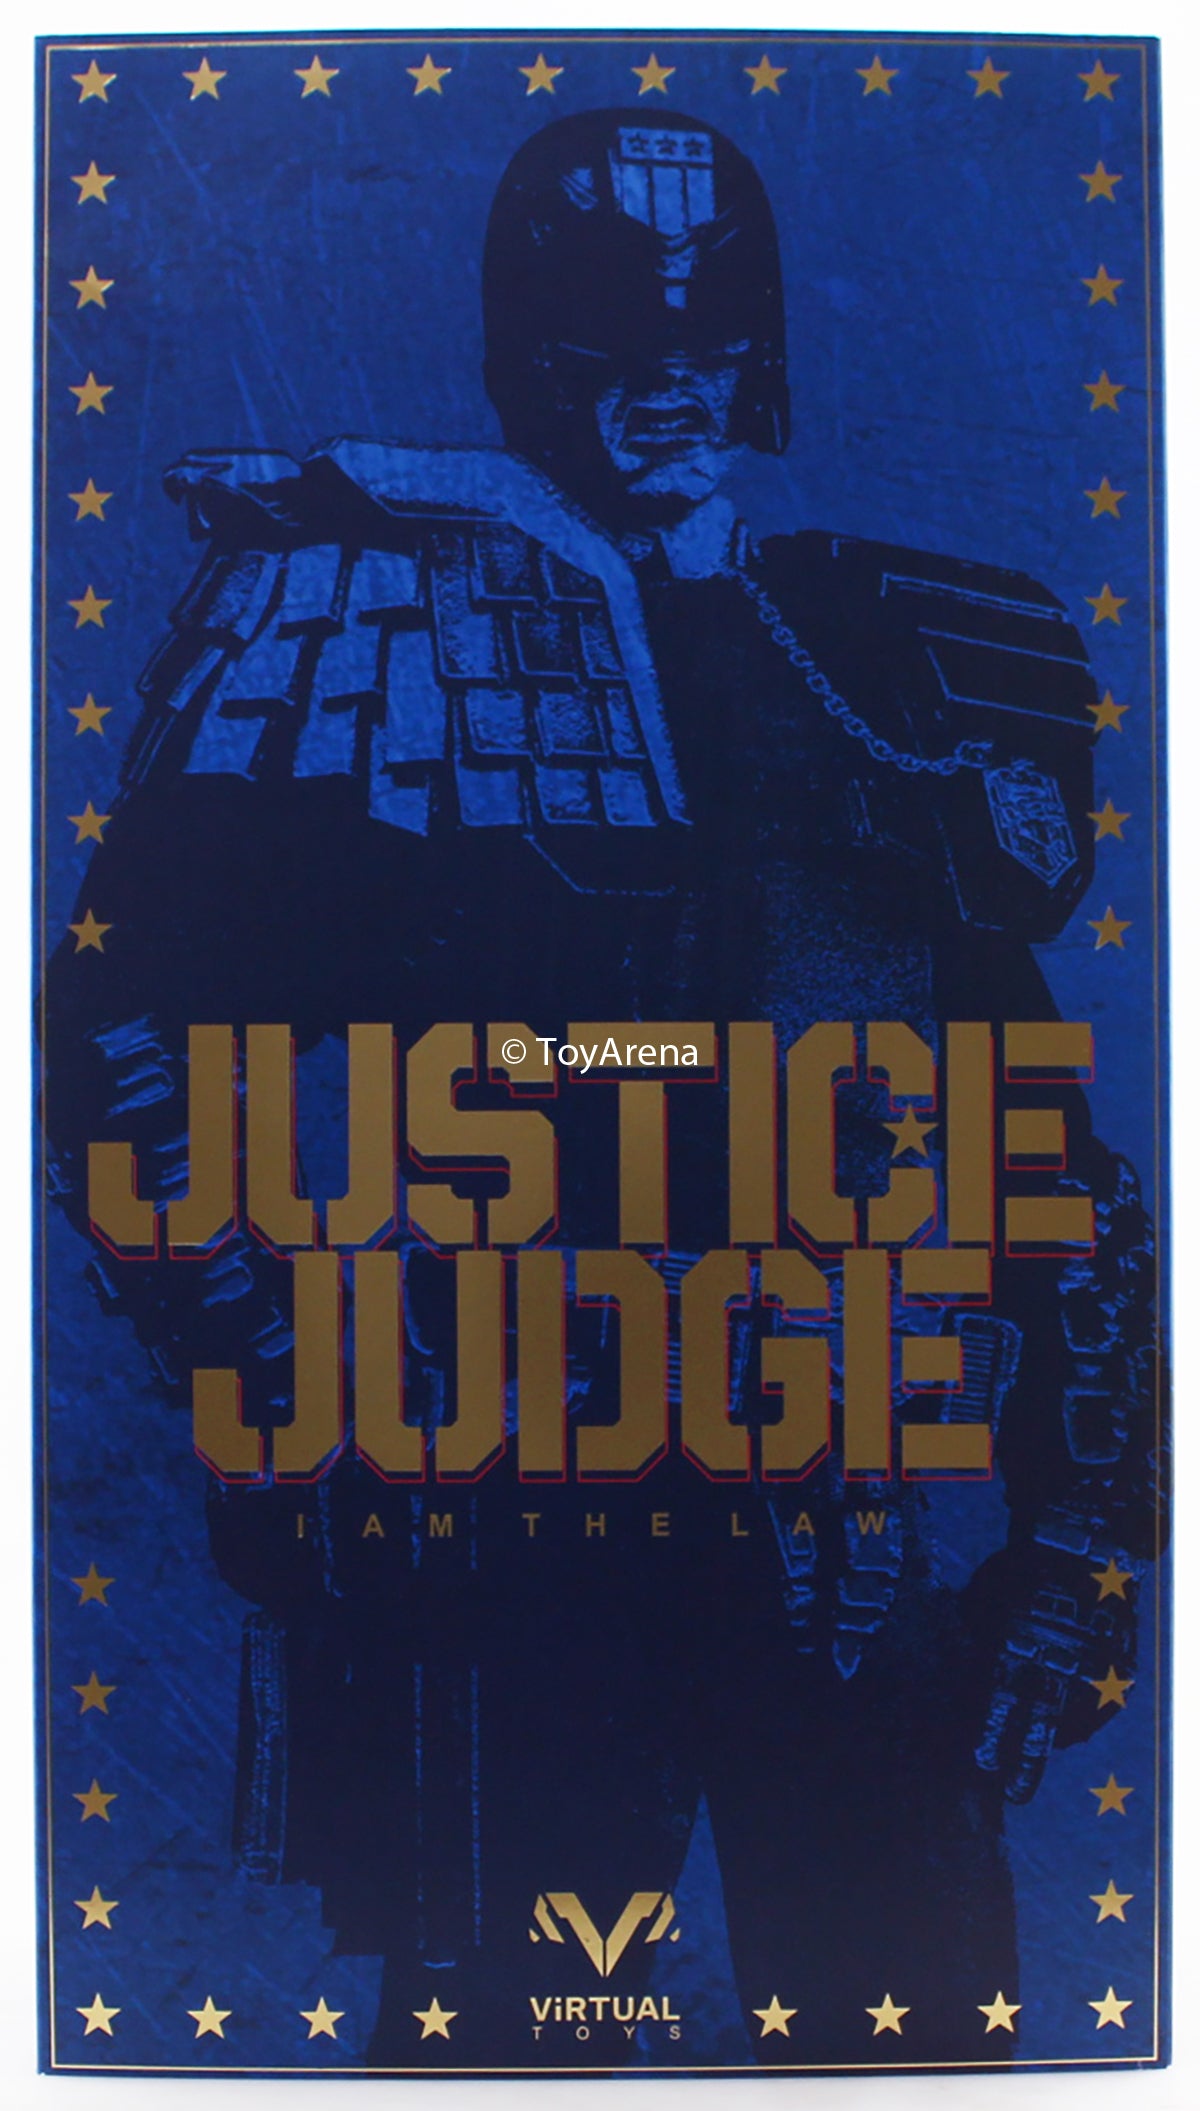 Virtual Toys (VTS) 1/6 VM-023 Justice Judge Dredd Stallone Figure